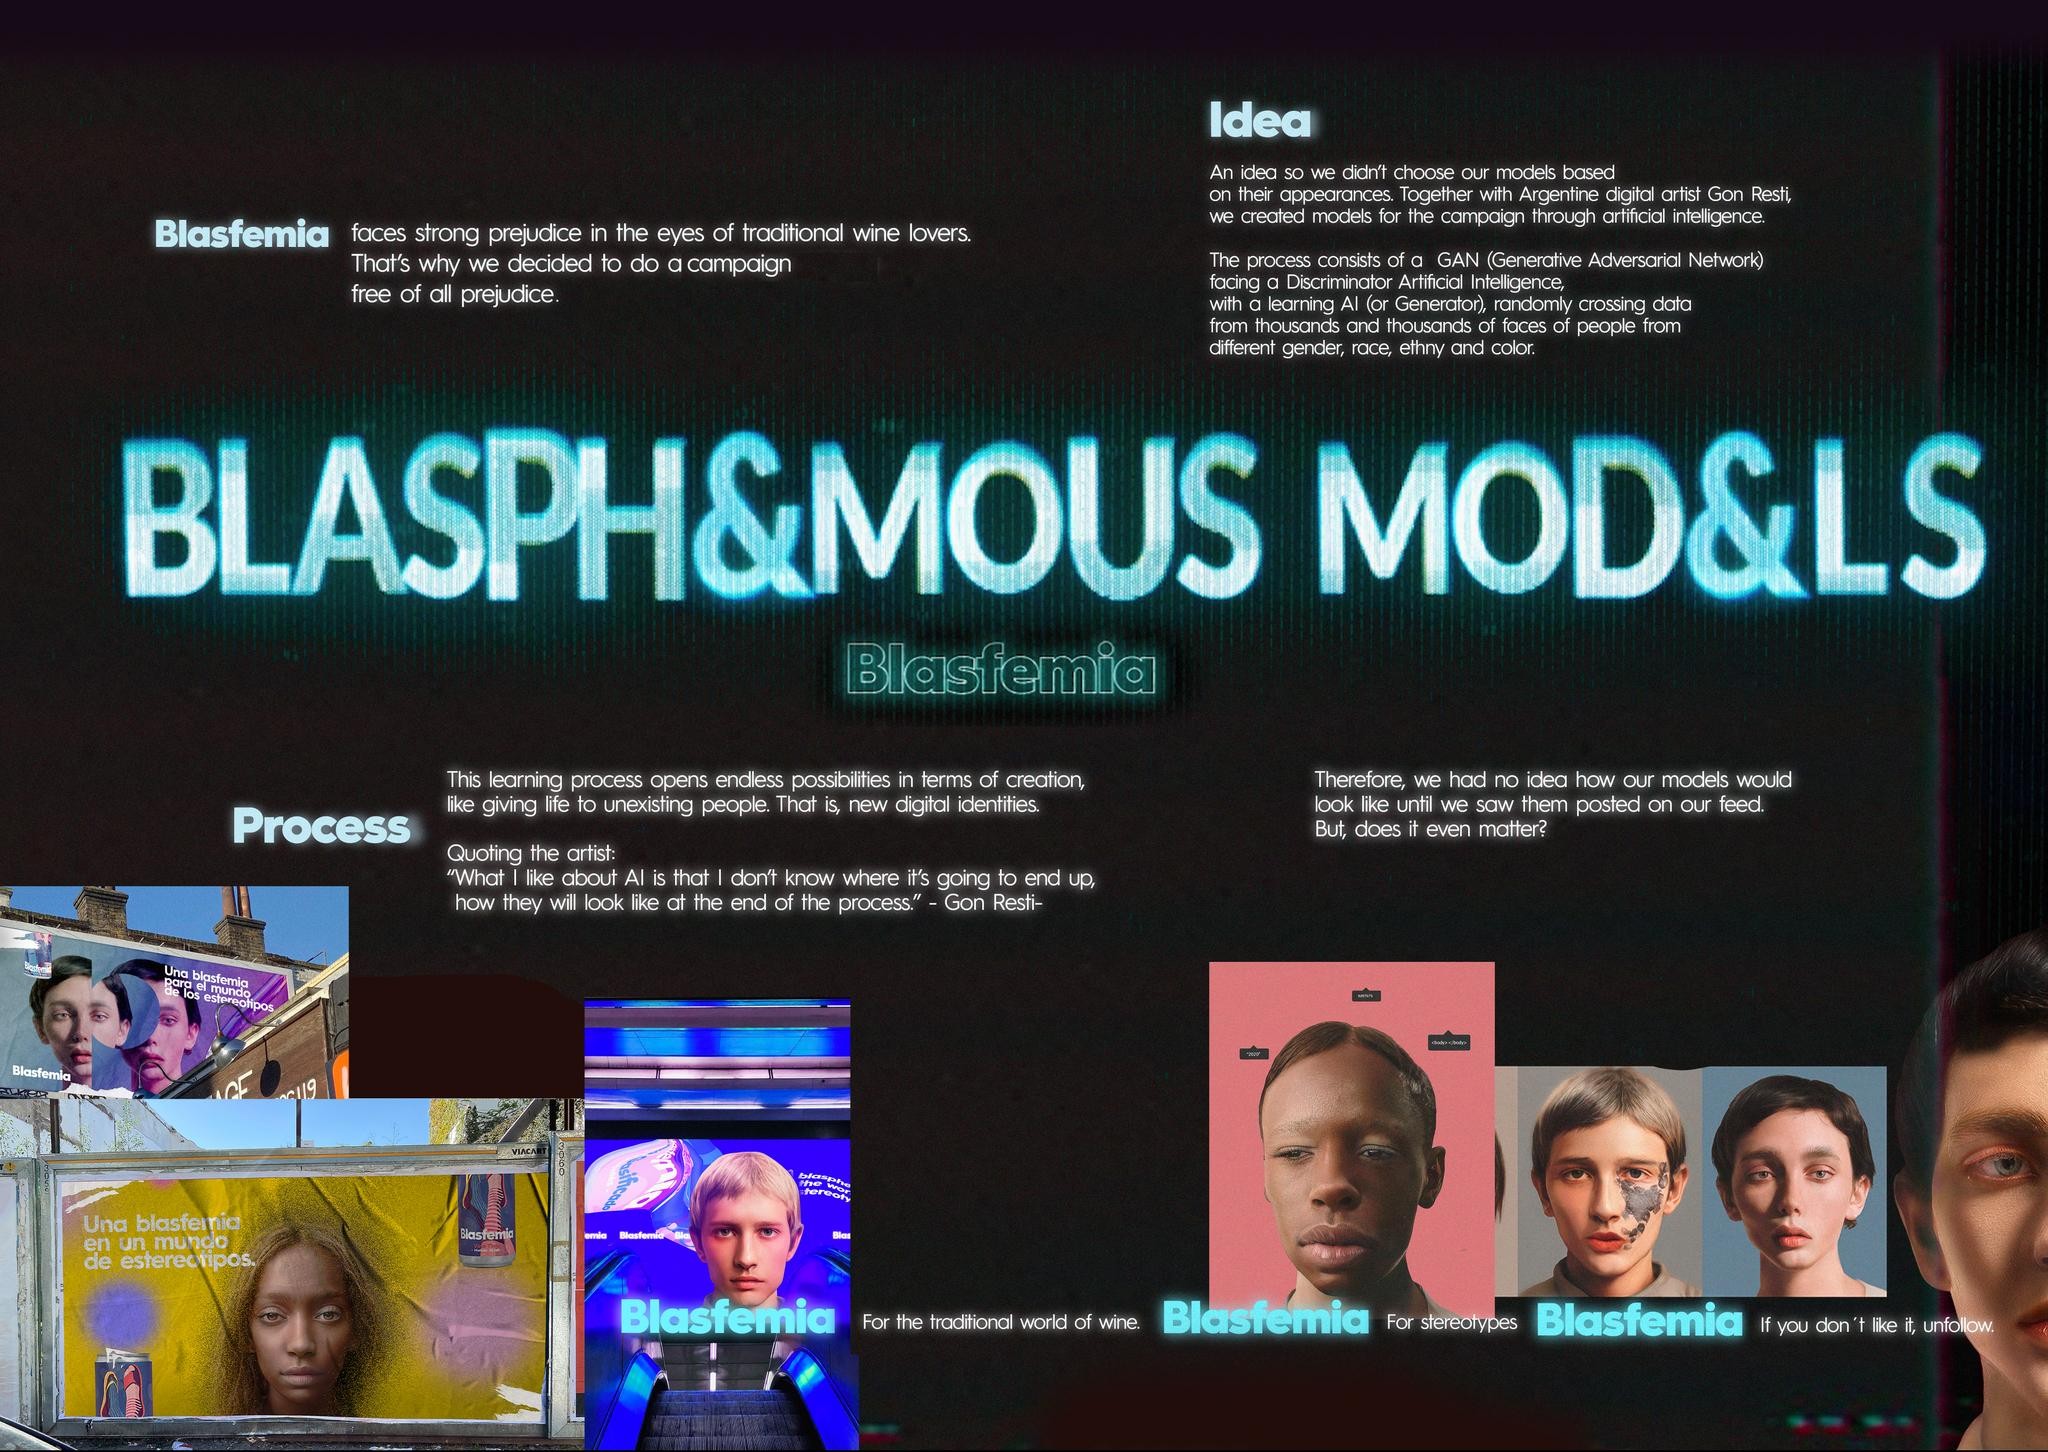 Blasphemous Models